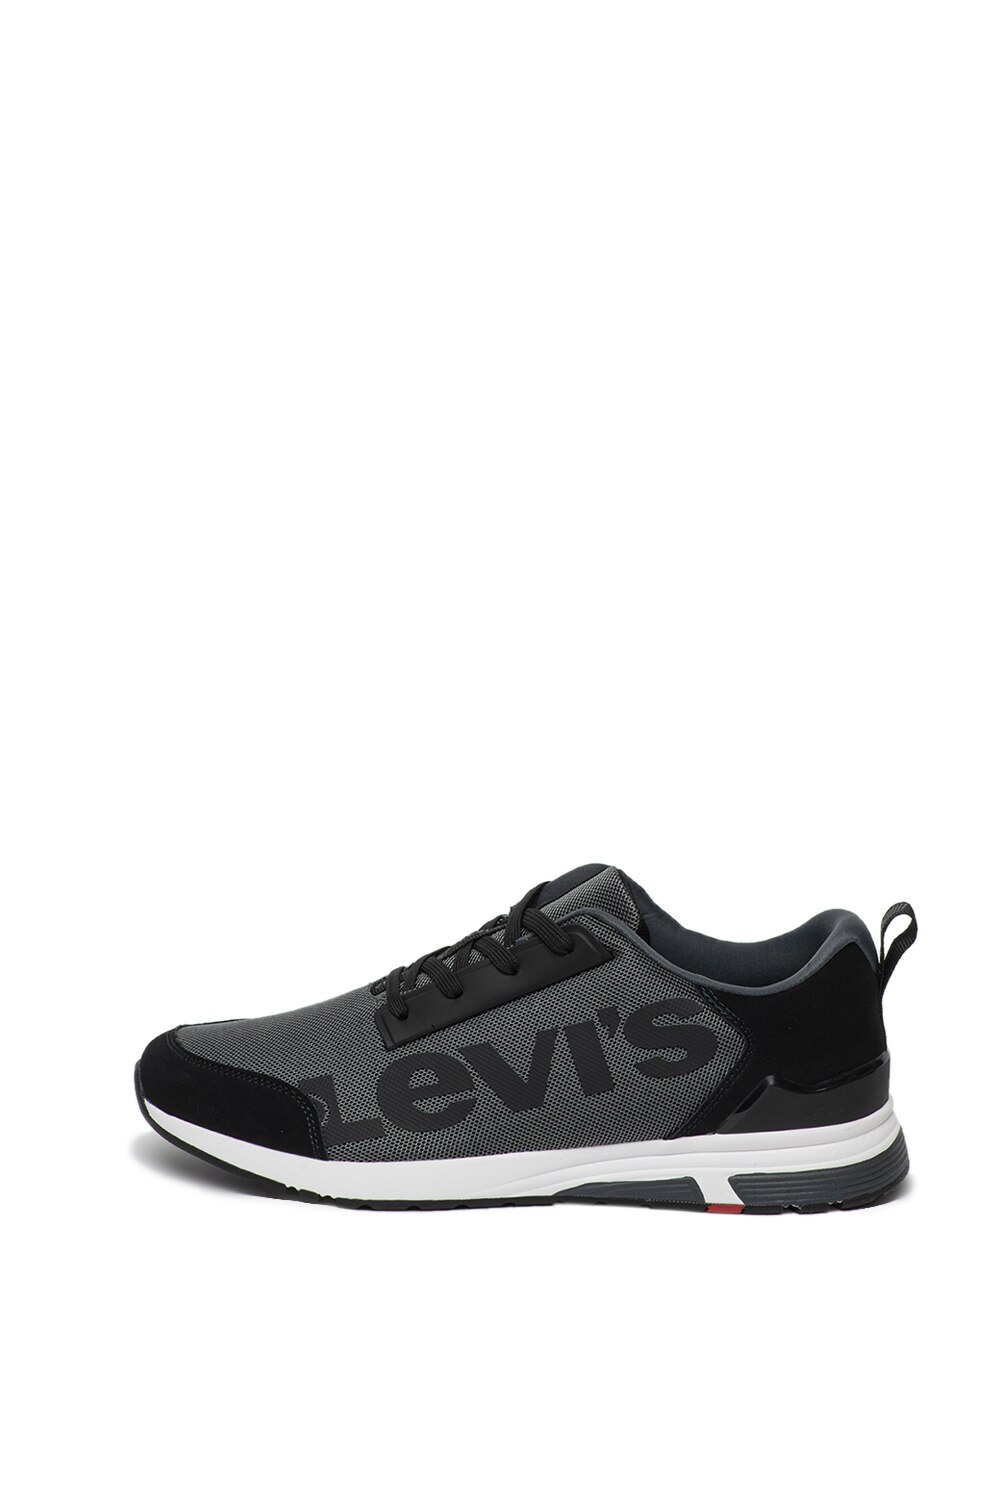 arithmetic Paving acceleration Levi's, Pantofi sport de plasa, cu garnituri de piele intoarsa ecologica  Bodie Plain, Negru/Gri inchis, 8.5 - eMAG.ro